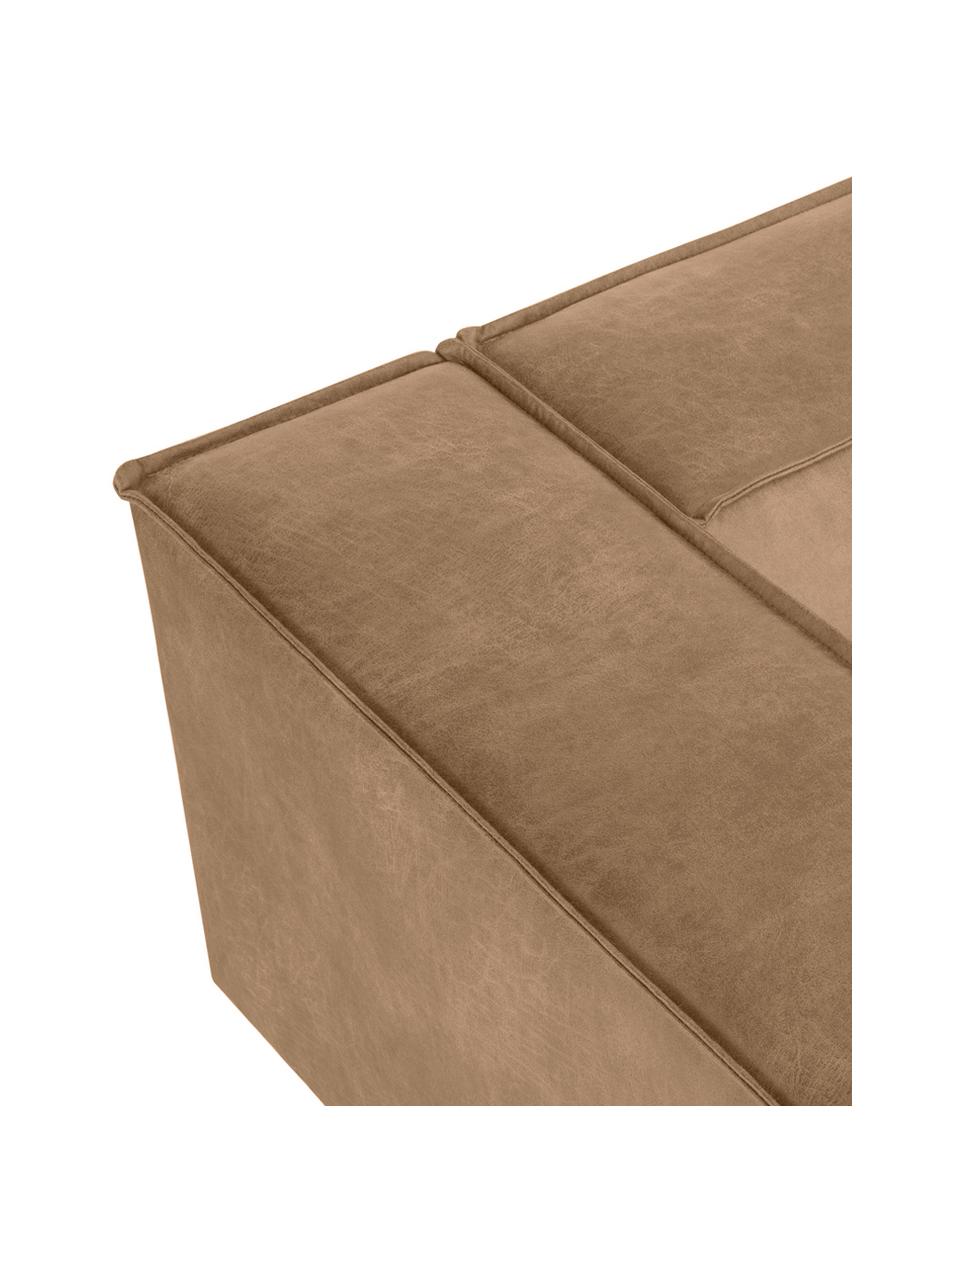 Leder-Sofa Abigail (3-Sitzer) in Braungrau mit Metall-Füßen, Bezug: Lederfaserstoff (70% Lede, Beine: Metall, lackiert, Leder Braungrau, B 230 x T 95 cm